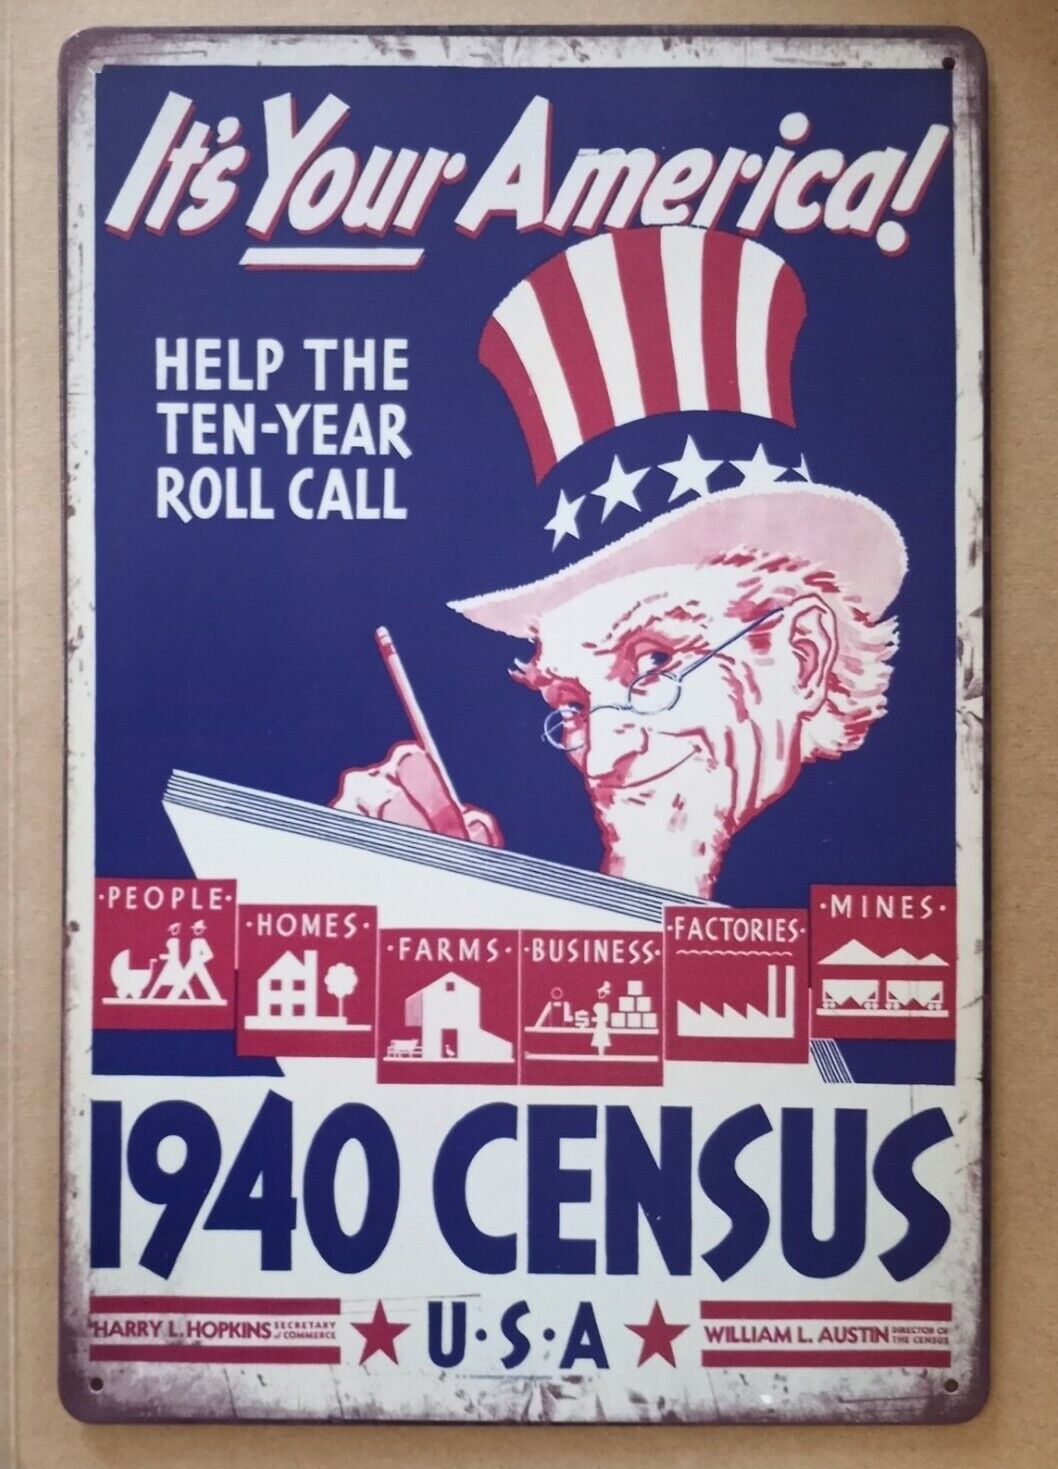 1940 Census - USA - metal hanging wall sign